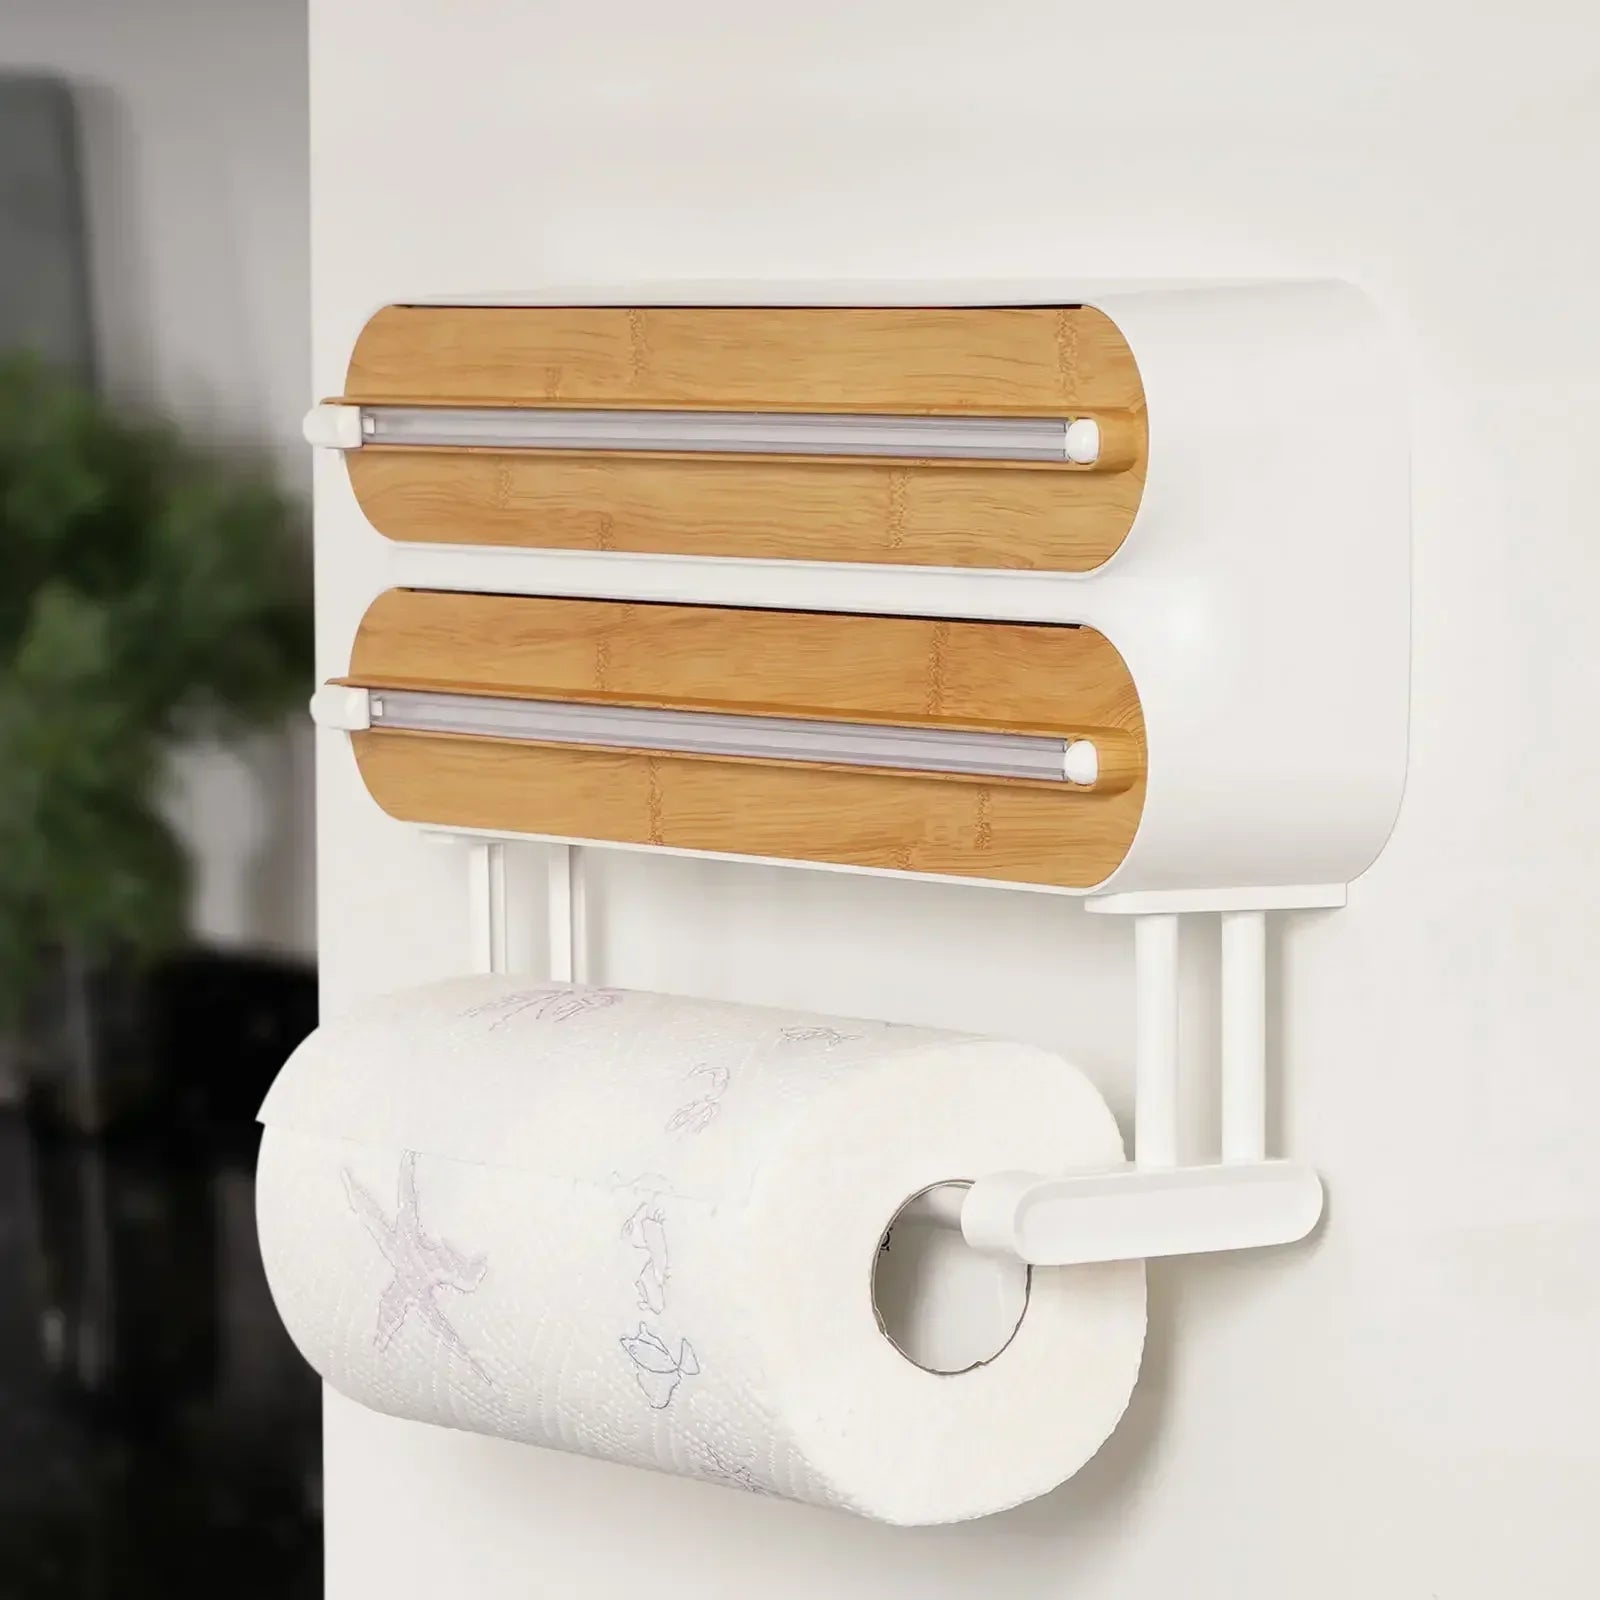 3 In 1 Aluminum Film Wrap Cutter WallMount Paper Towel Holder Cling Film Cutting Holder Plastic Wrap Dispenser Kitchen Organizer B / CN